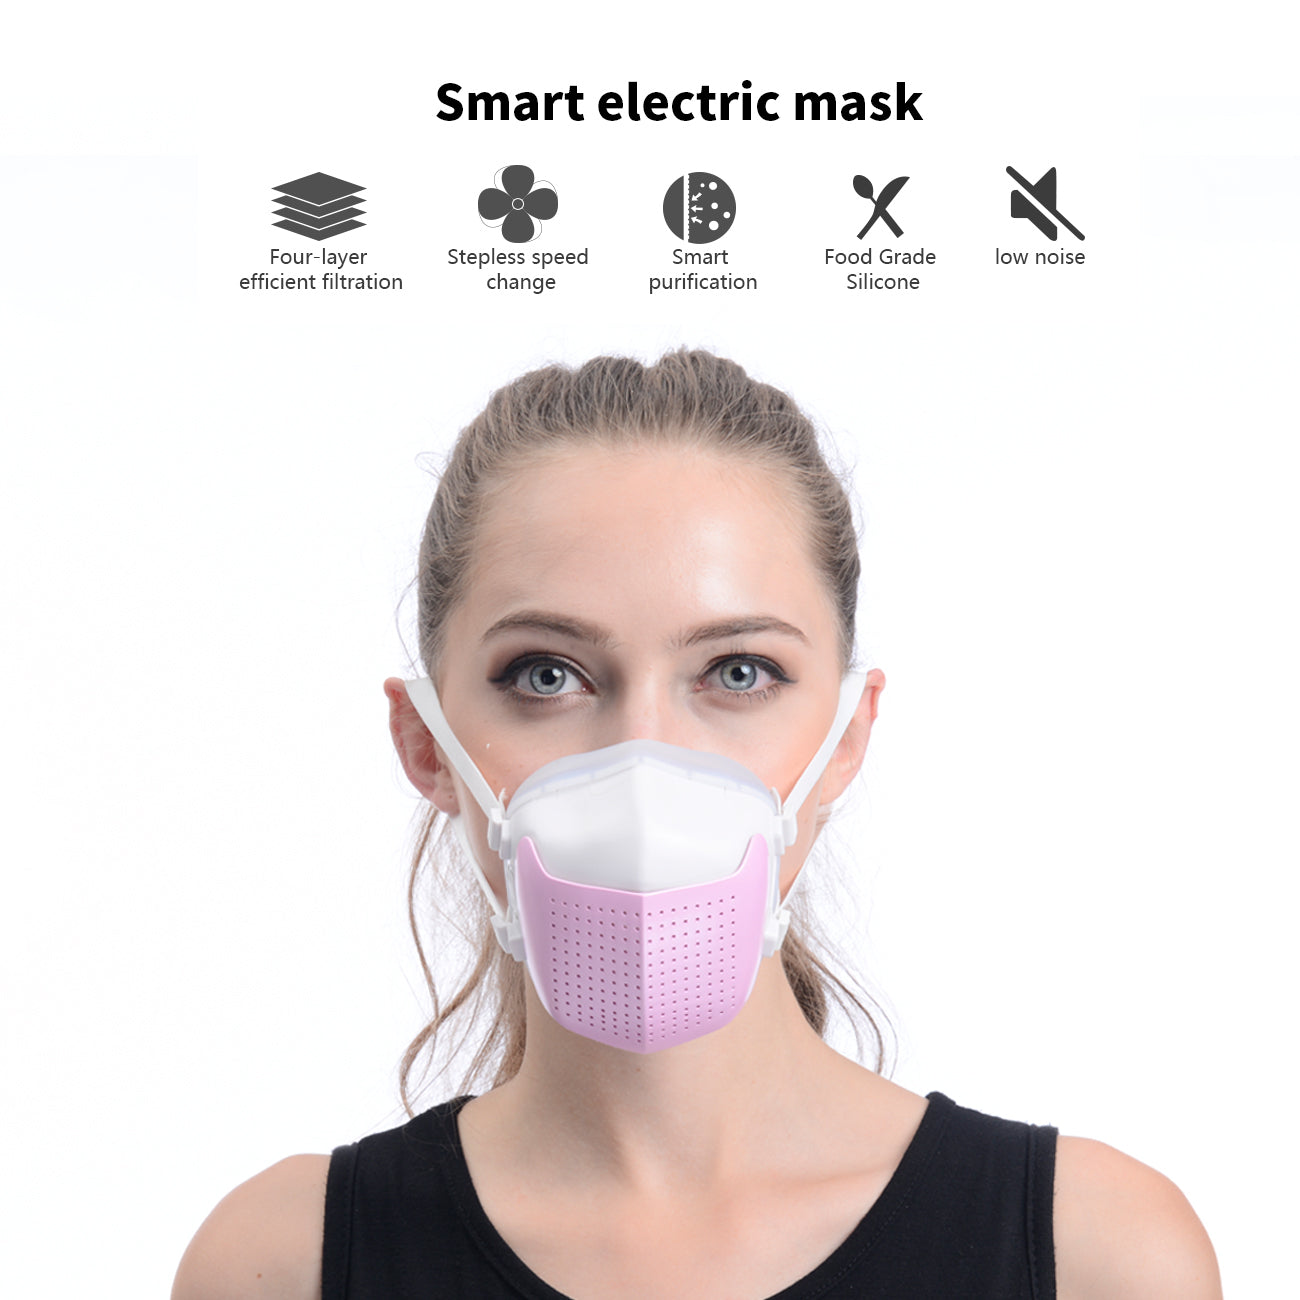 Mask Electric Smart 4-Layer Efficient Filtration